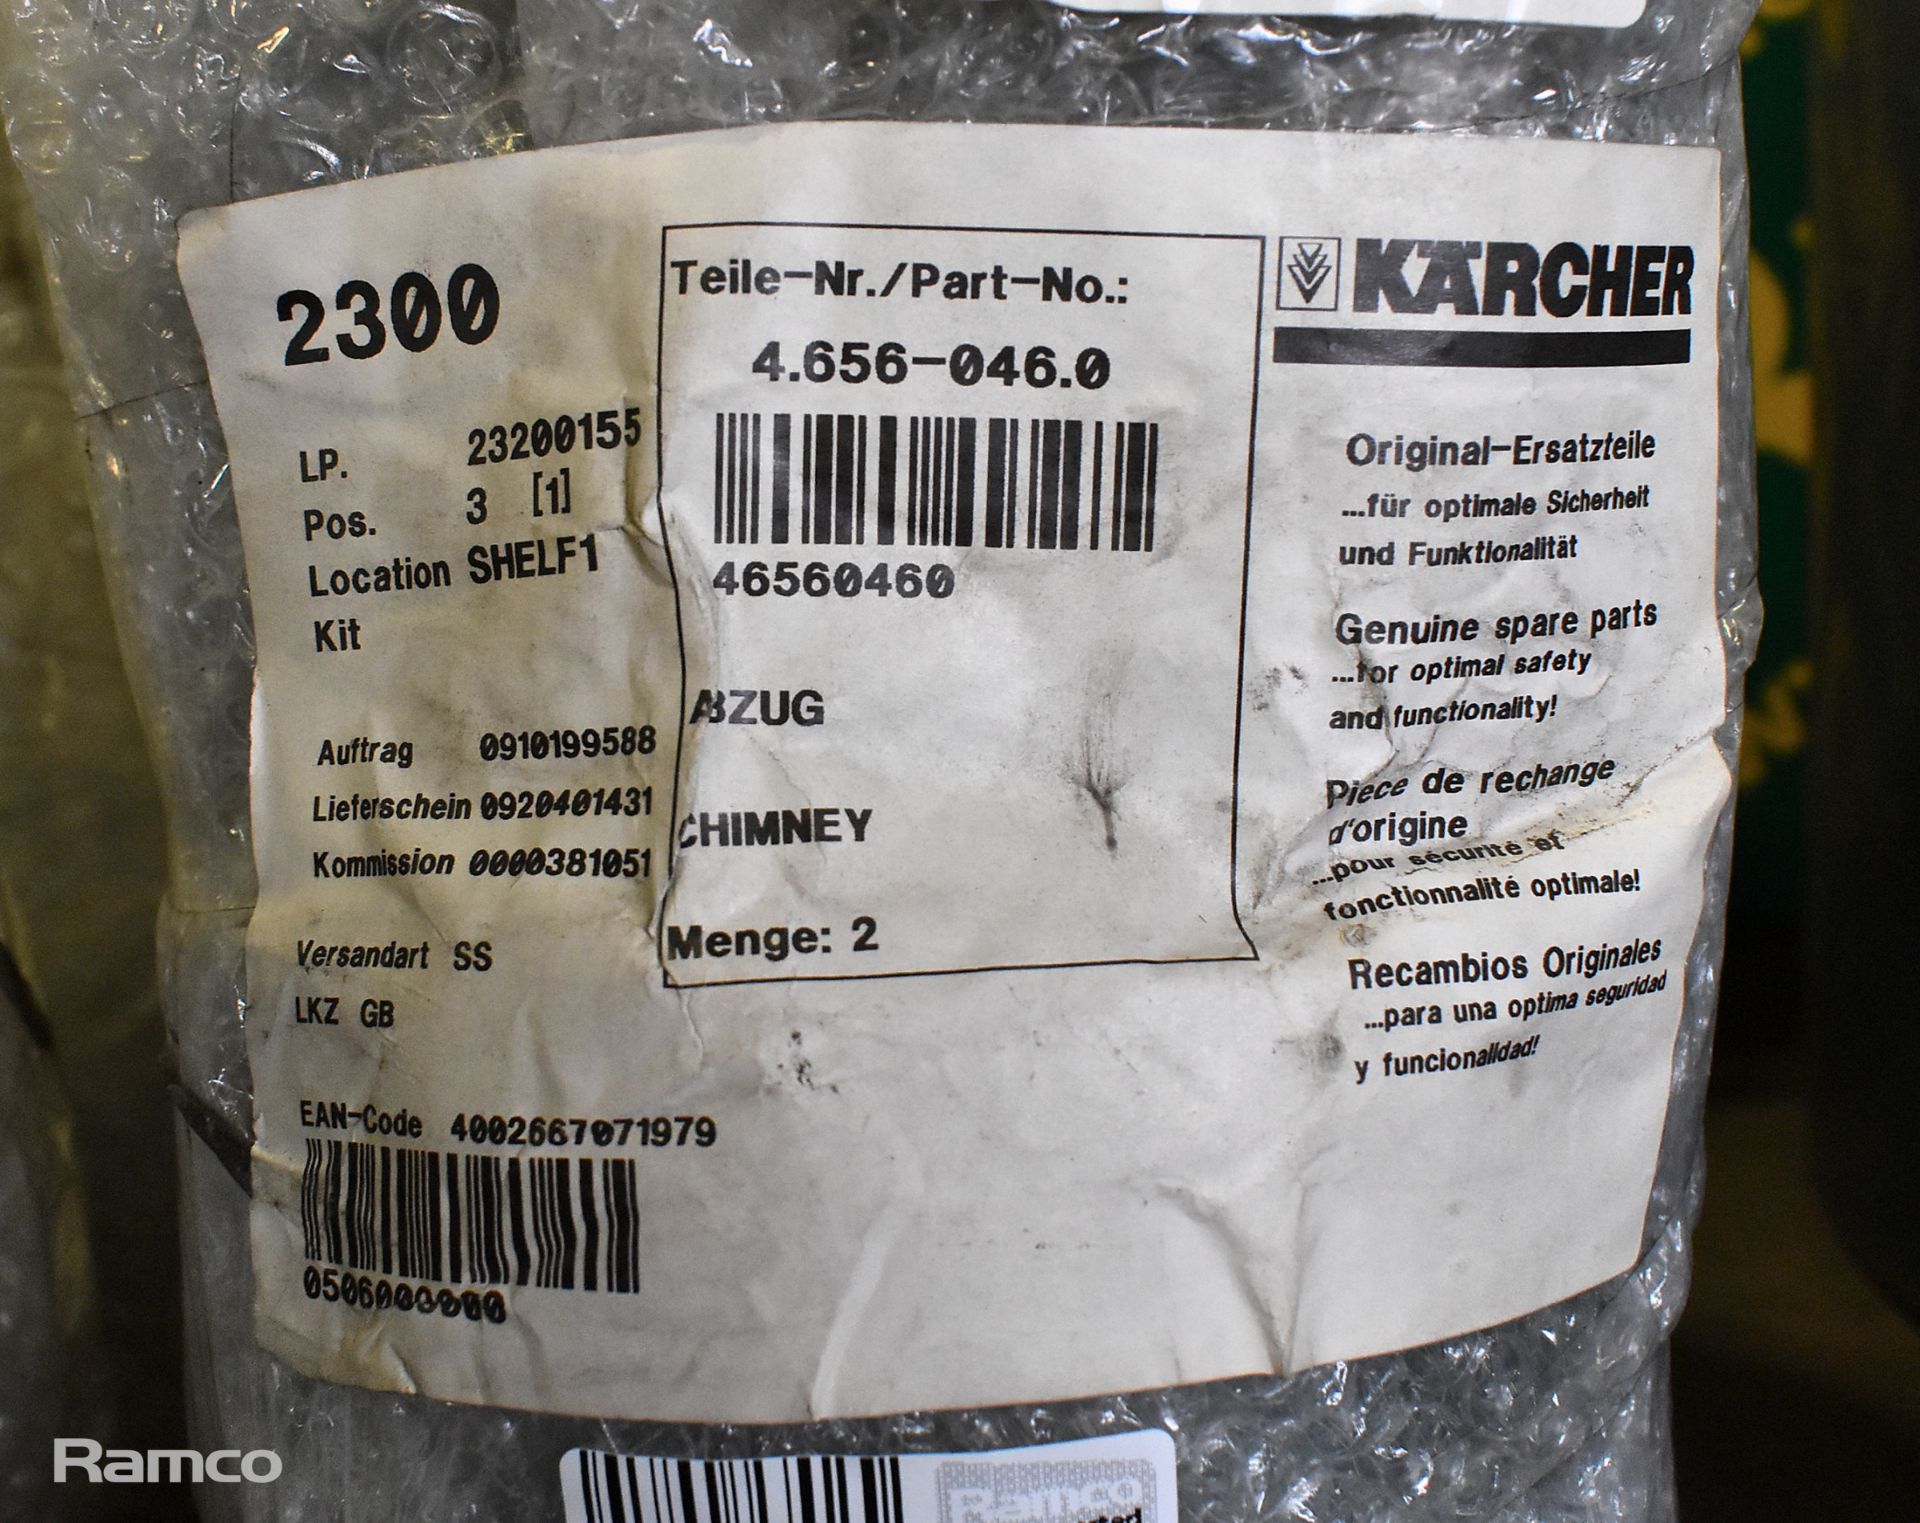 5x Karcher 4.656-046.0 pressure washer fluke caps - Image 4 of 4